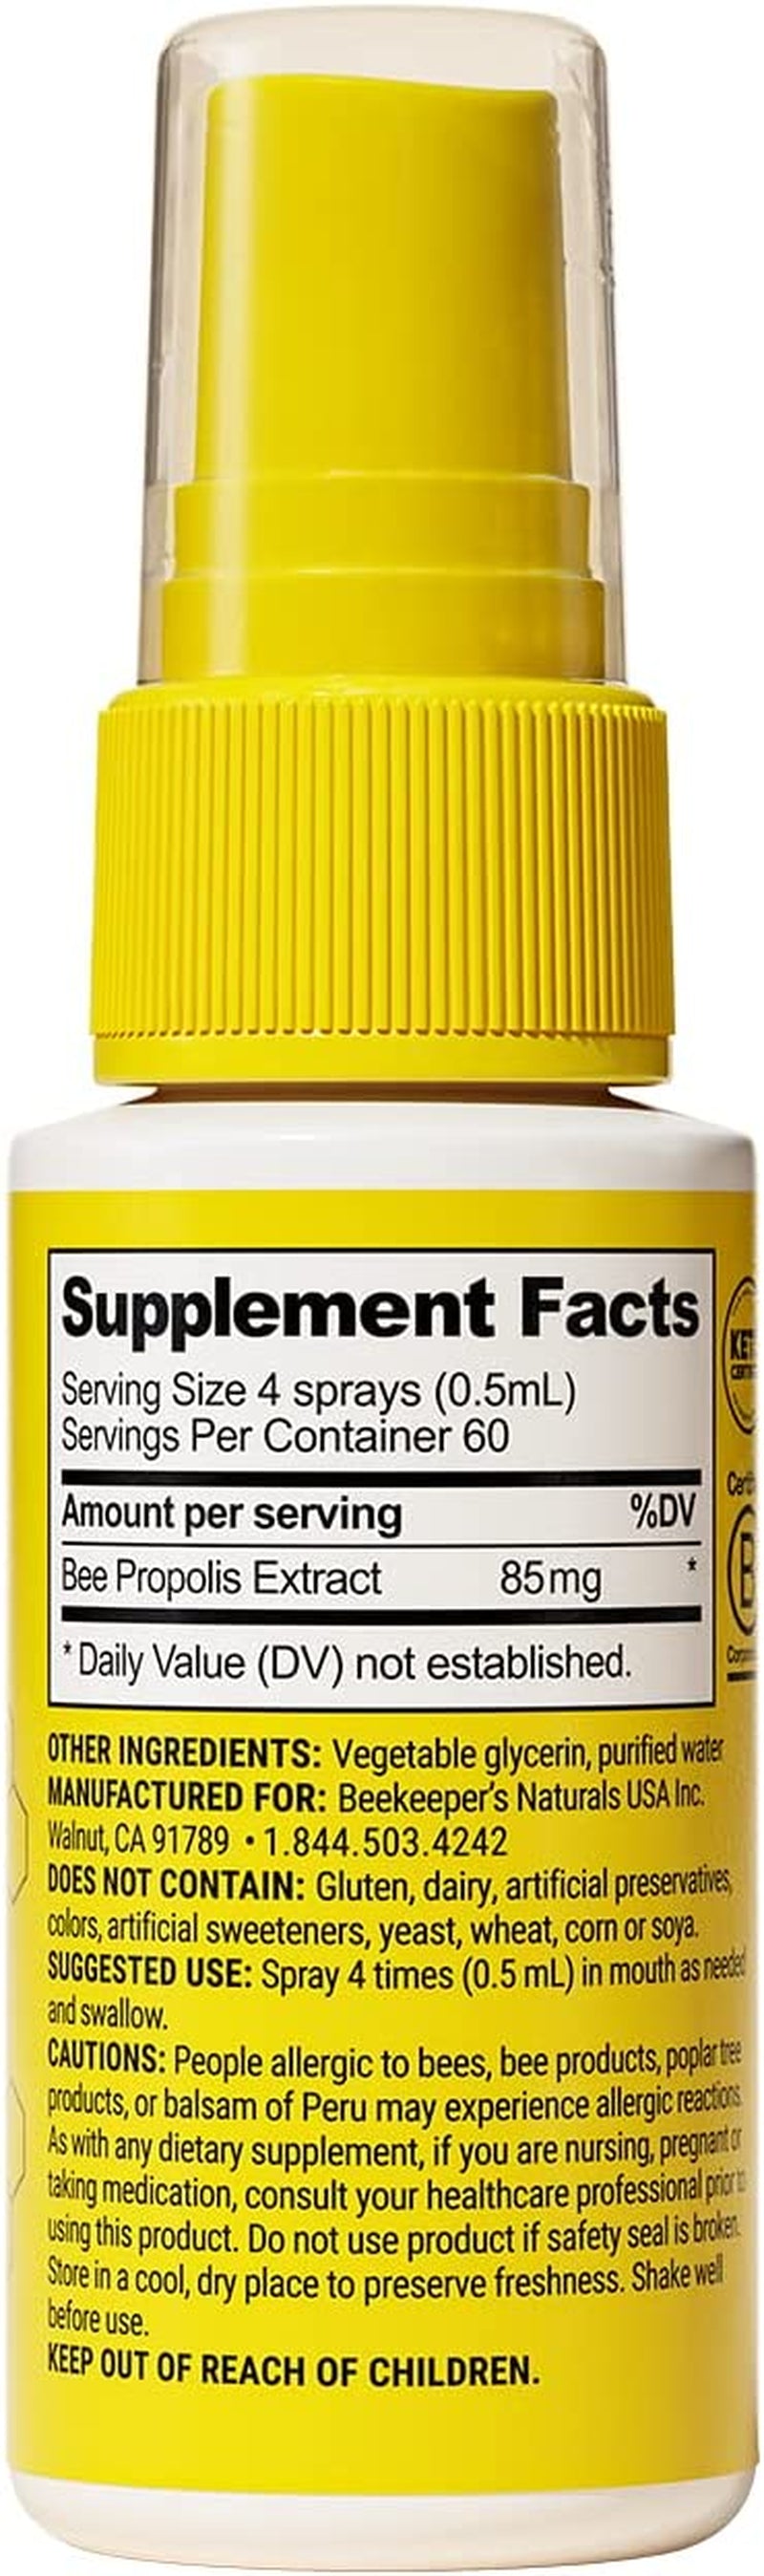 Propolis Throat Spray, Natural Immune Support & Sore Throat Relief - Antioxidants, Keto, Paleo, Gluten-Free, 1.06 Oz (Pack of 2)